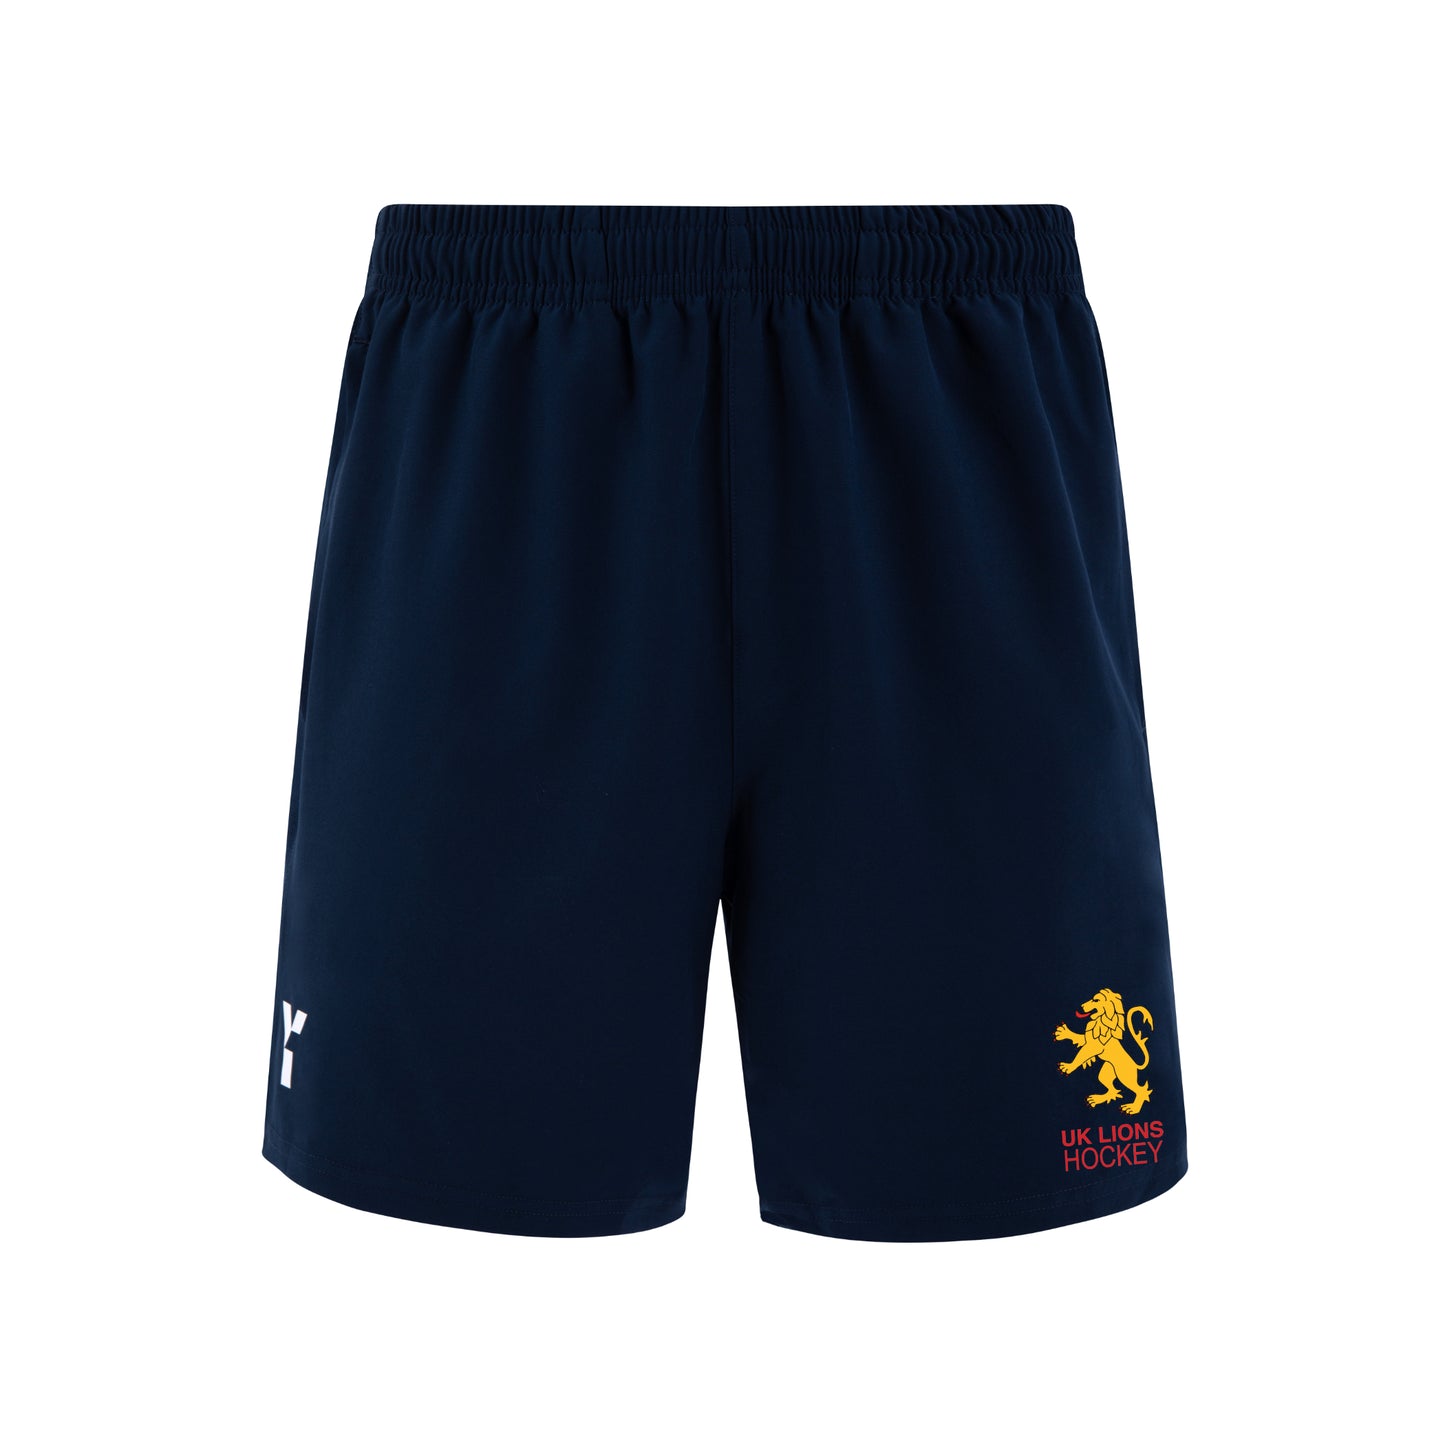 UK Lions HC - Shorts Mens Navy